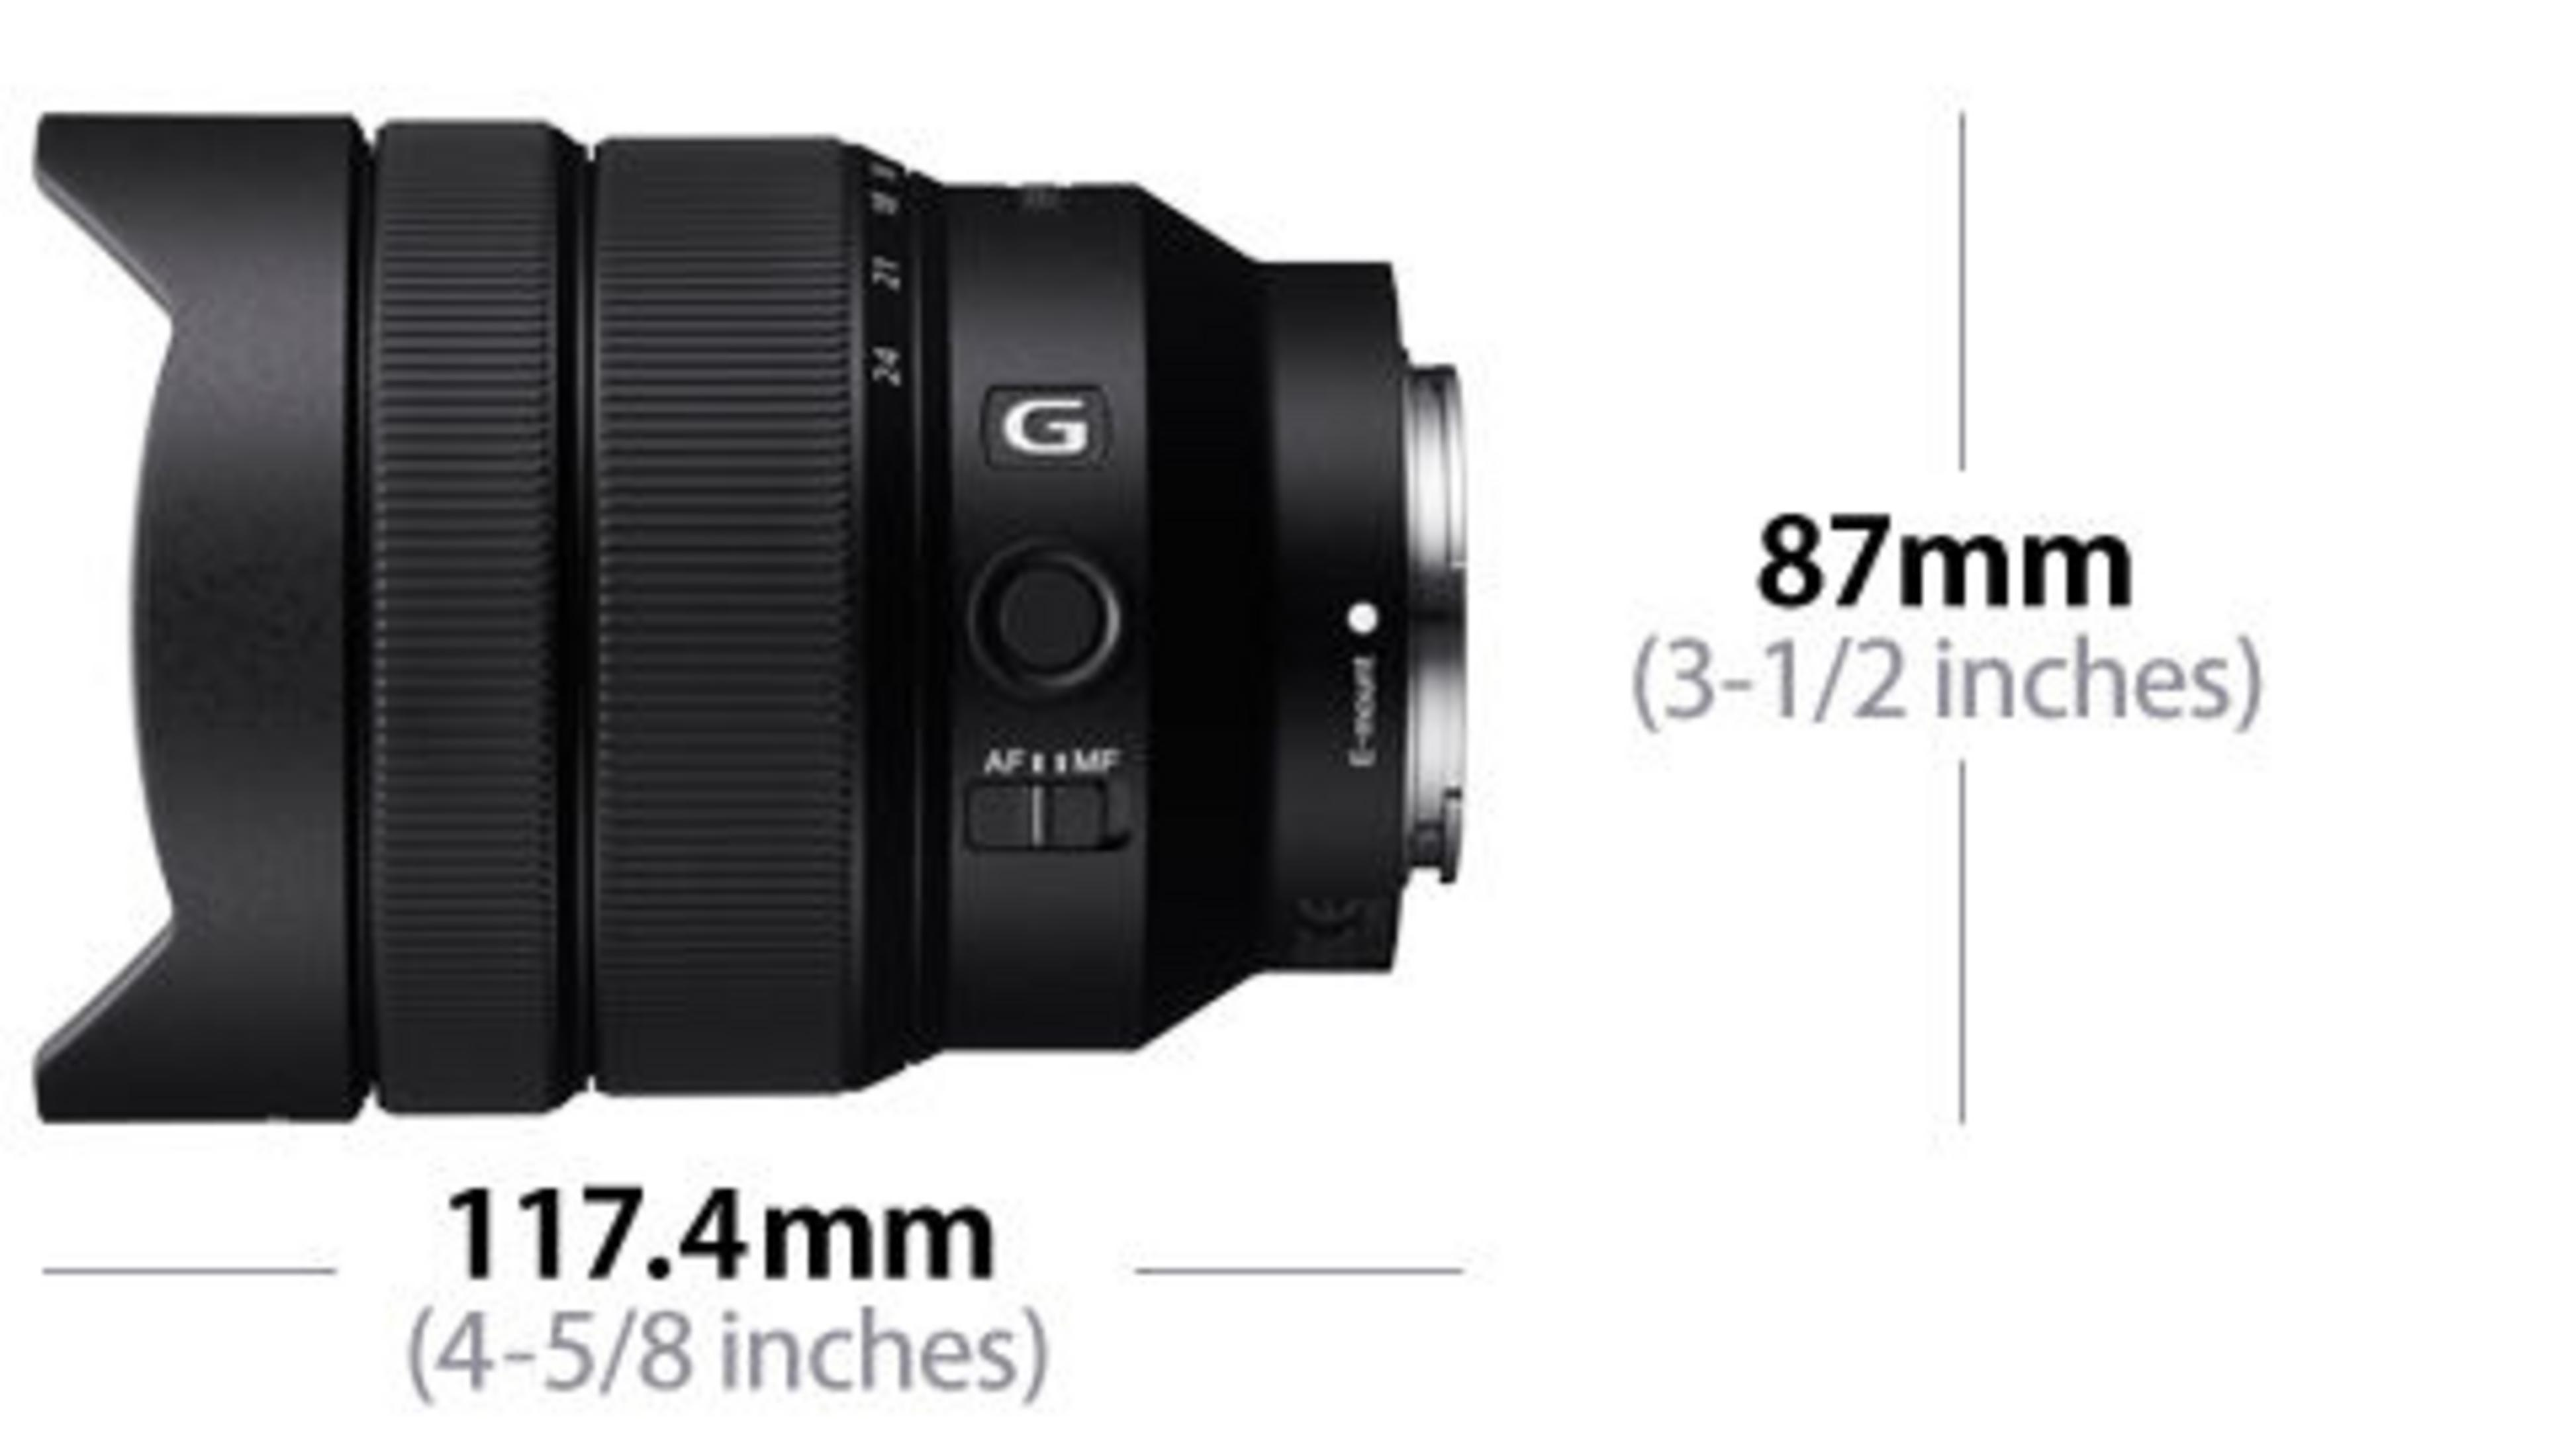 FHB, OBJEKTIV DMR, G 12 mm f/4 12-24MM SEL OSS ASPH, - 24 Sony Blende E-Mount, Circulare SuperED, mm 1224 SONY G (Objektiv Schwarz) G-Lens, für F4